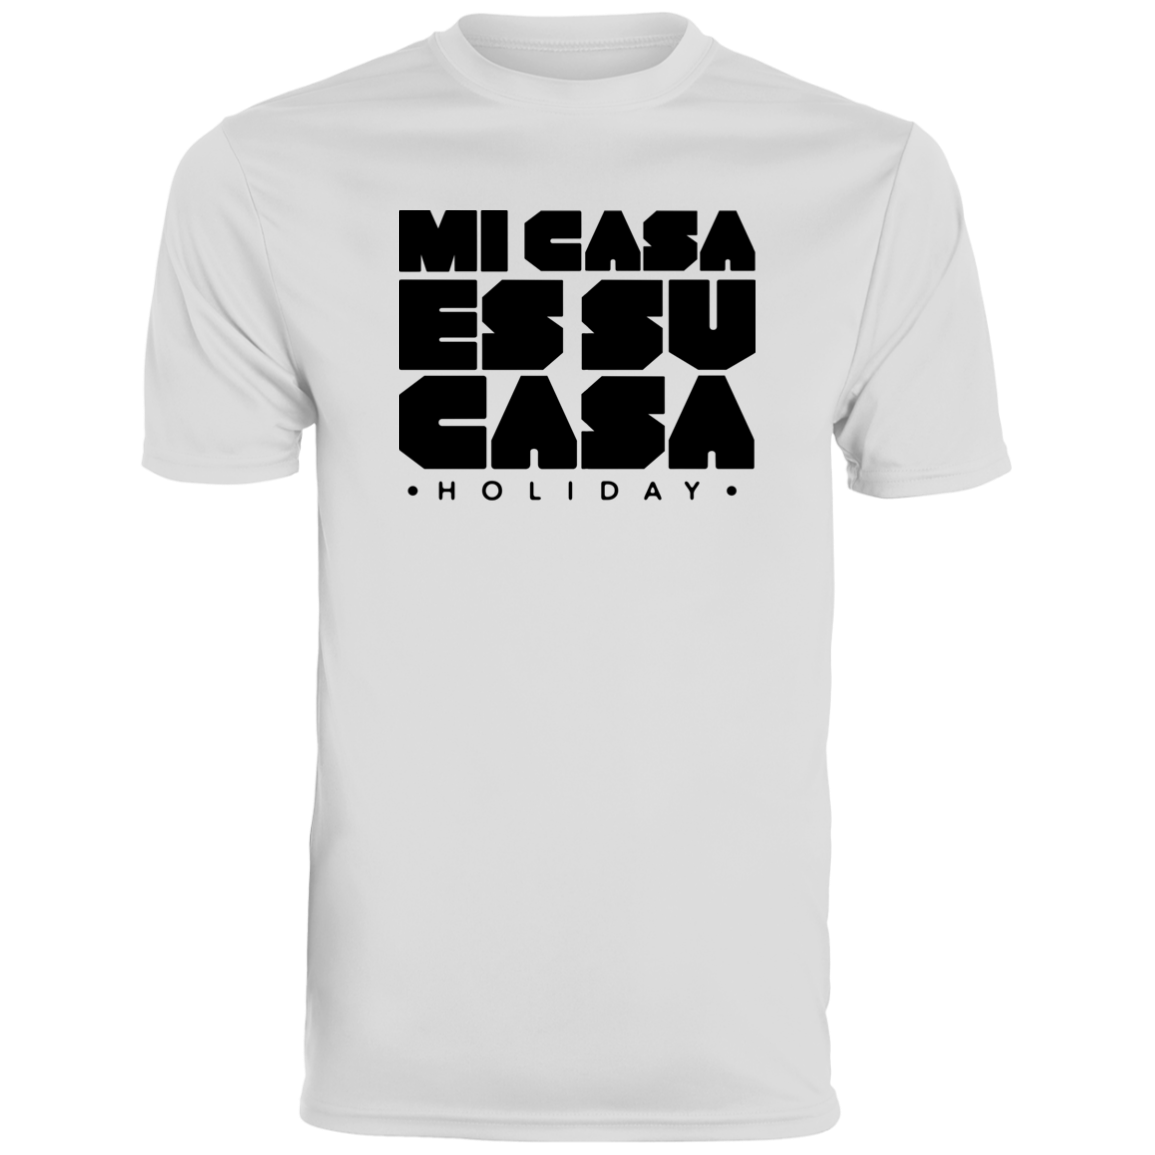 Classic MCH Augusta Men's Wicking T-Shirt